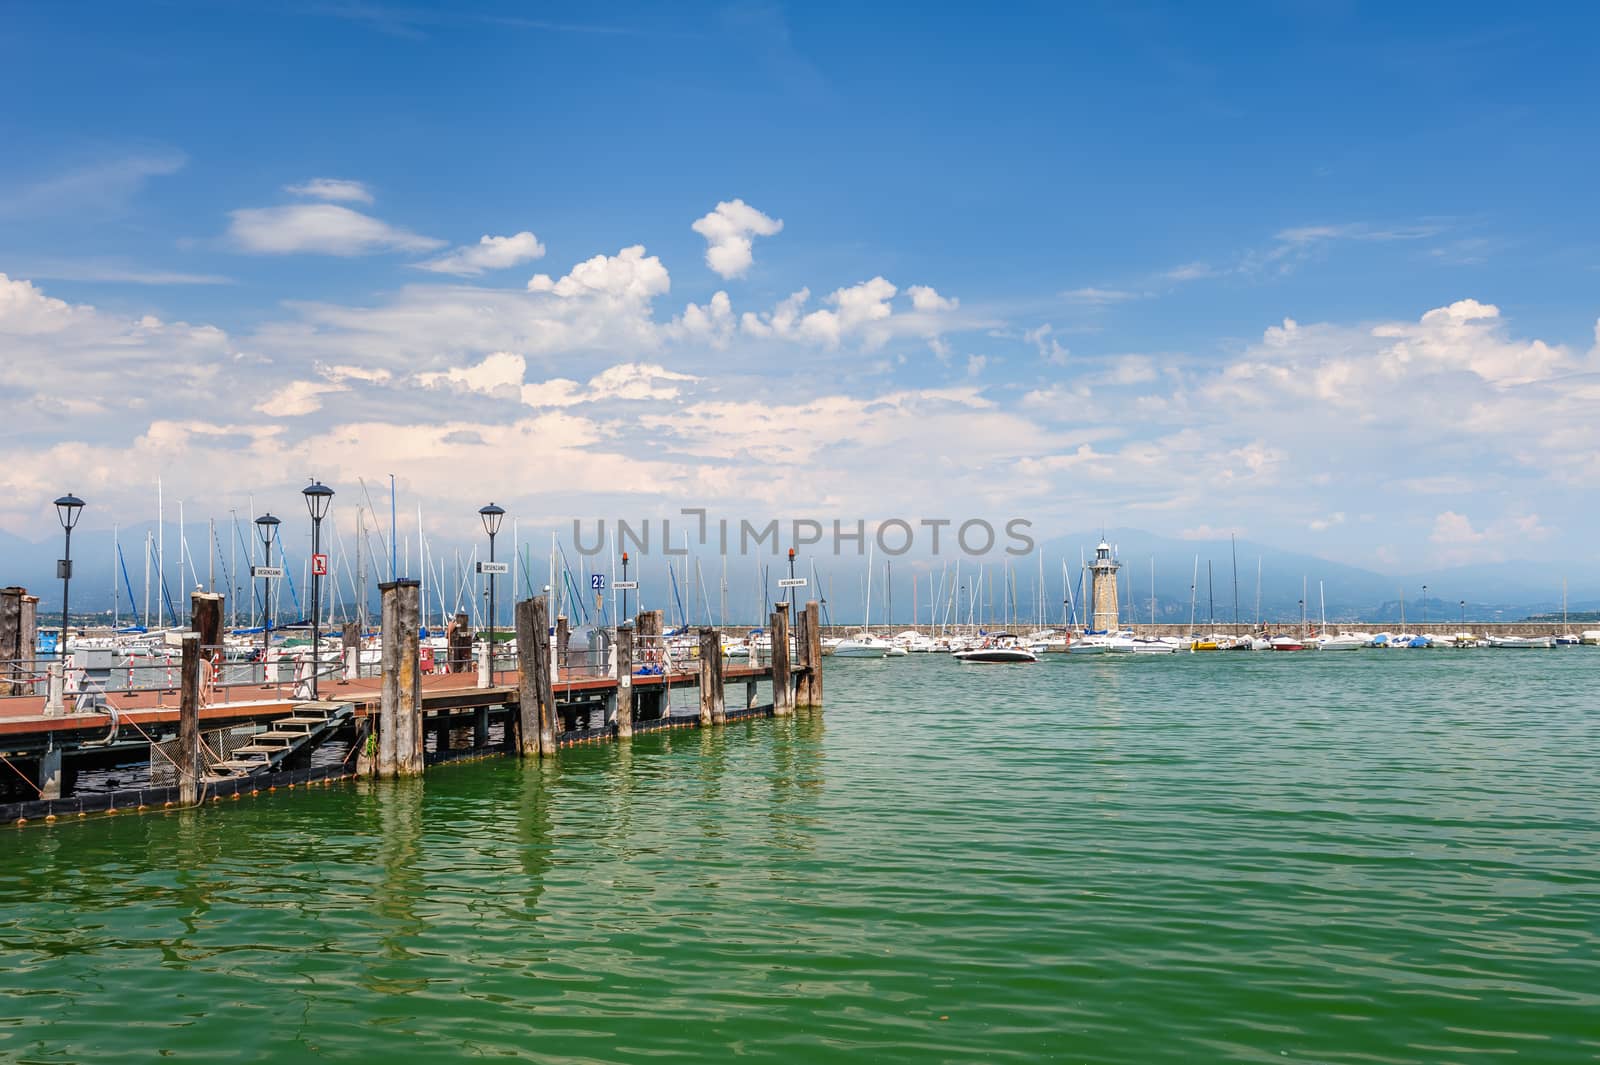 Small yachts in harbor in Desenzano, Garda lake, Italy by starush